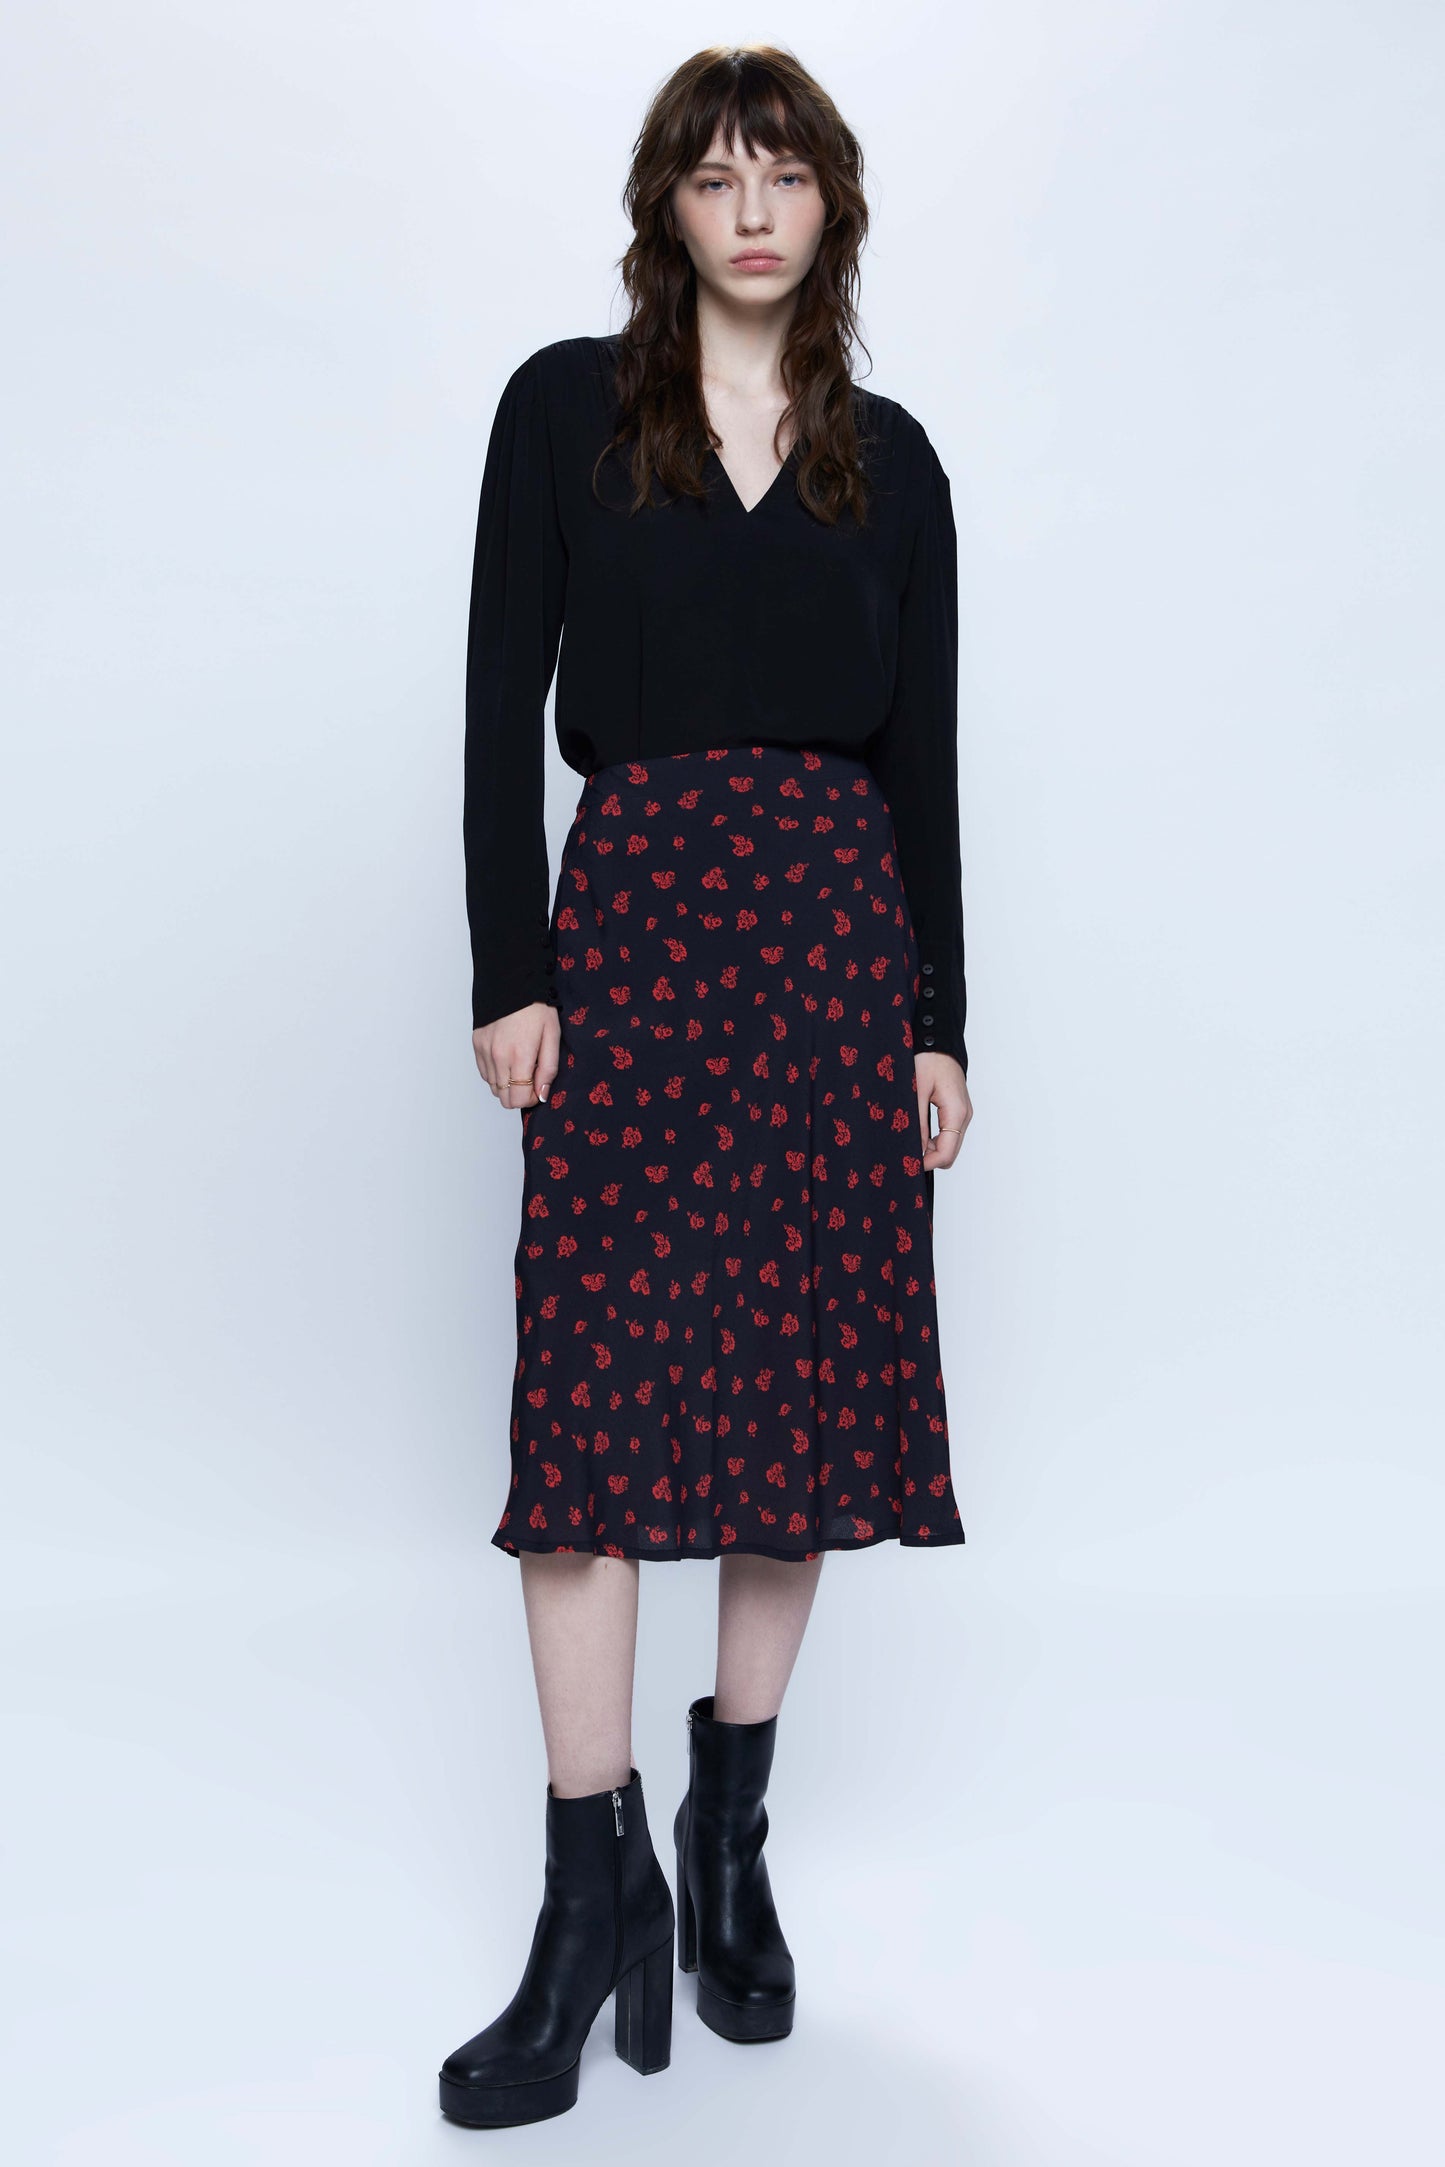 Flowy midi skirt with red flower print